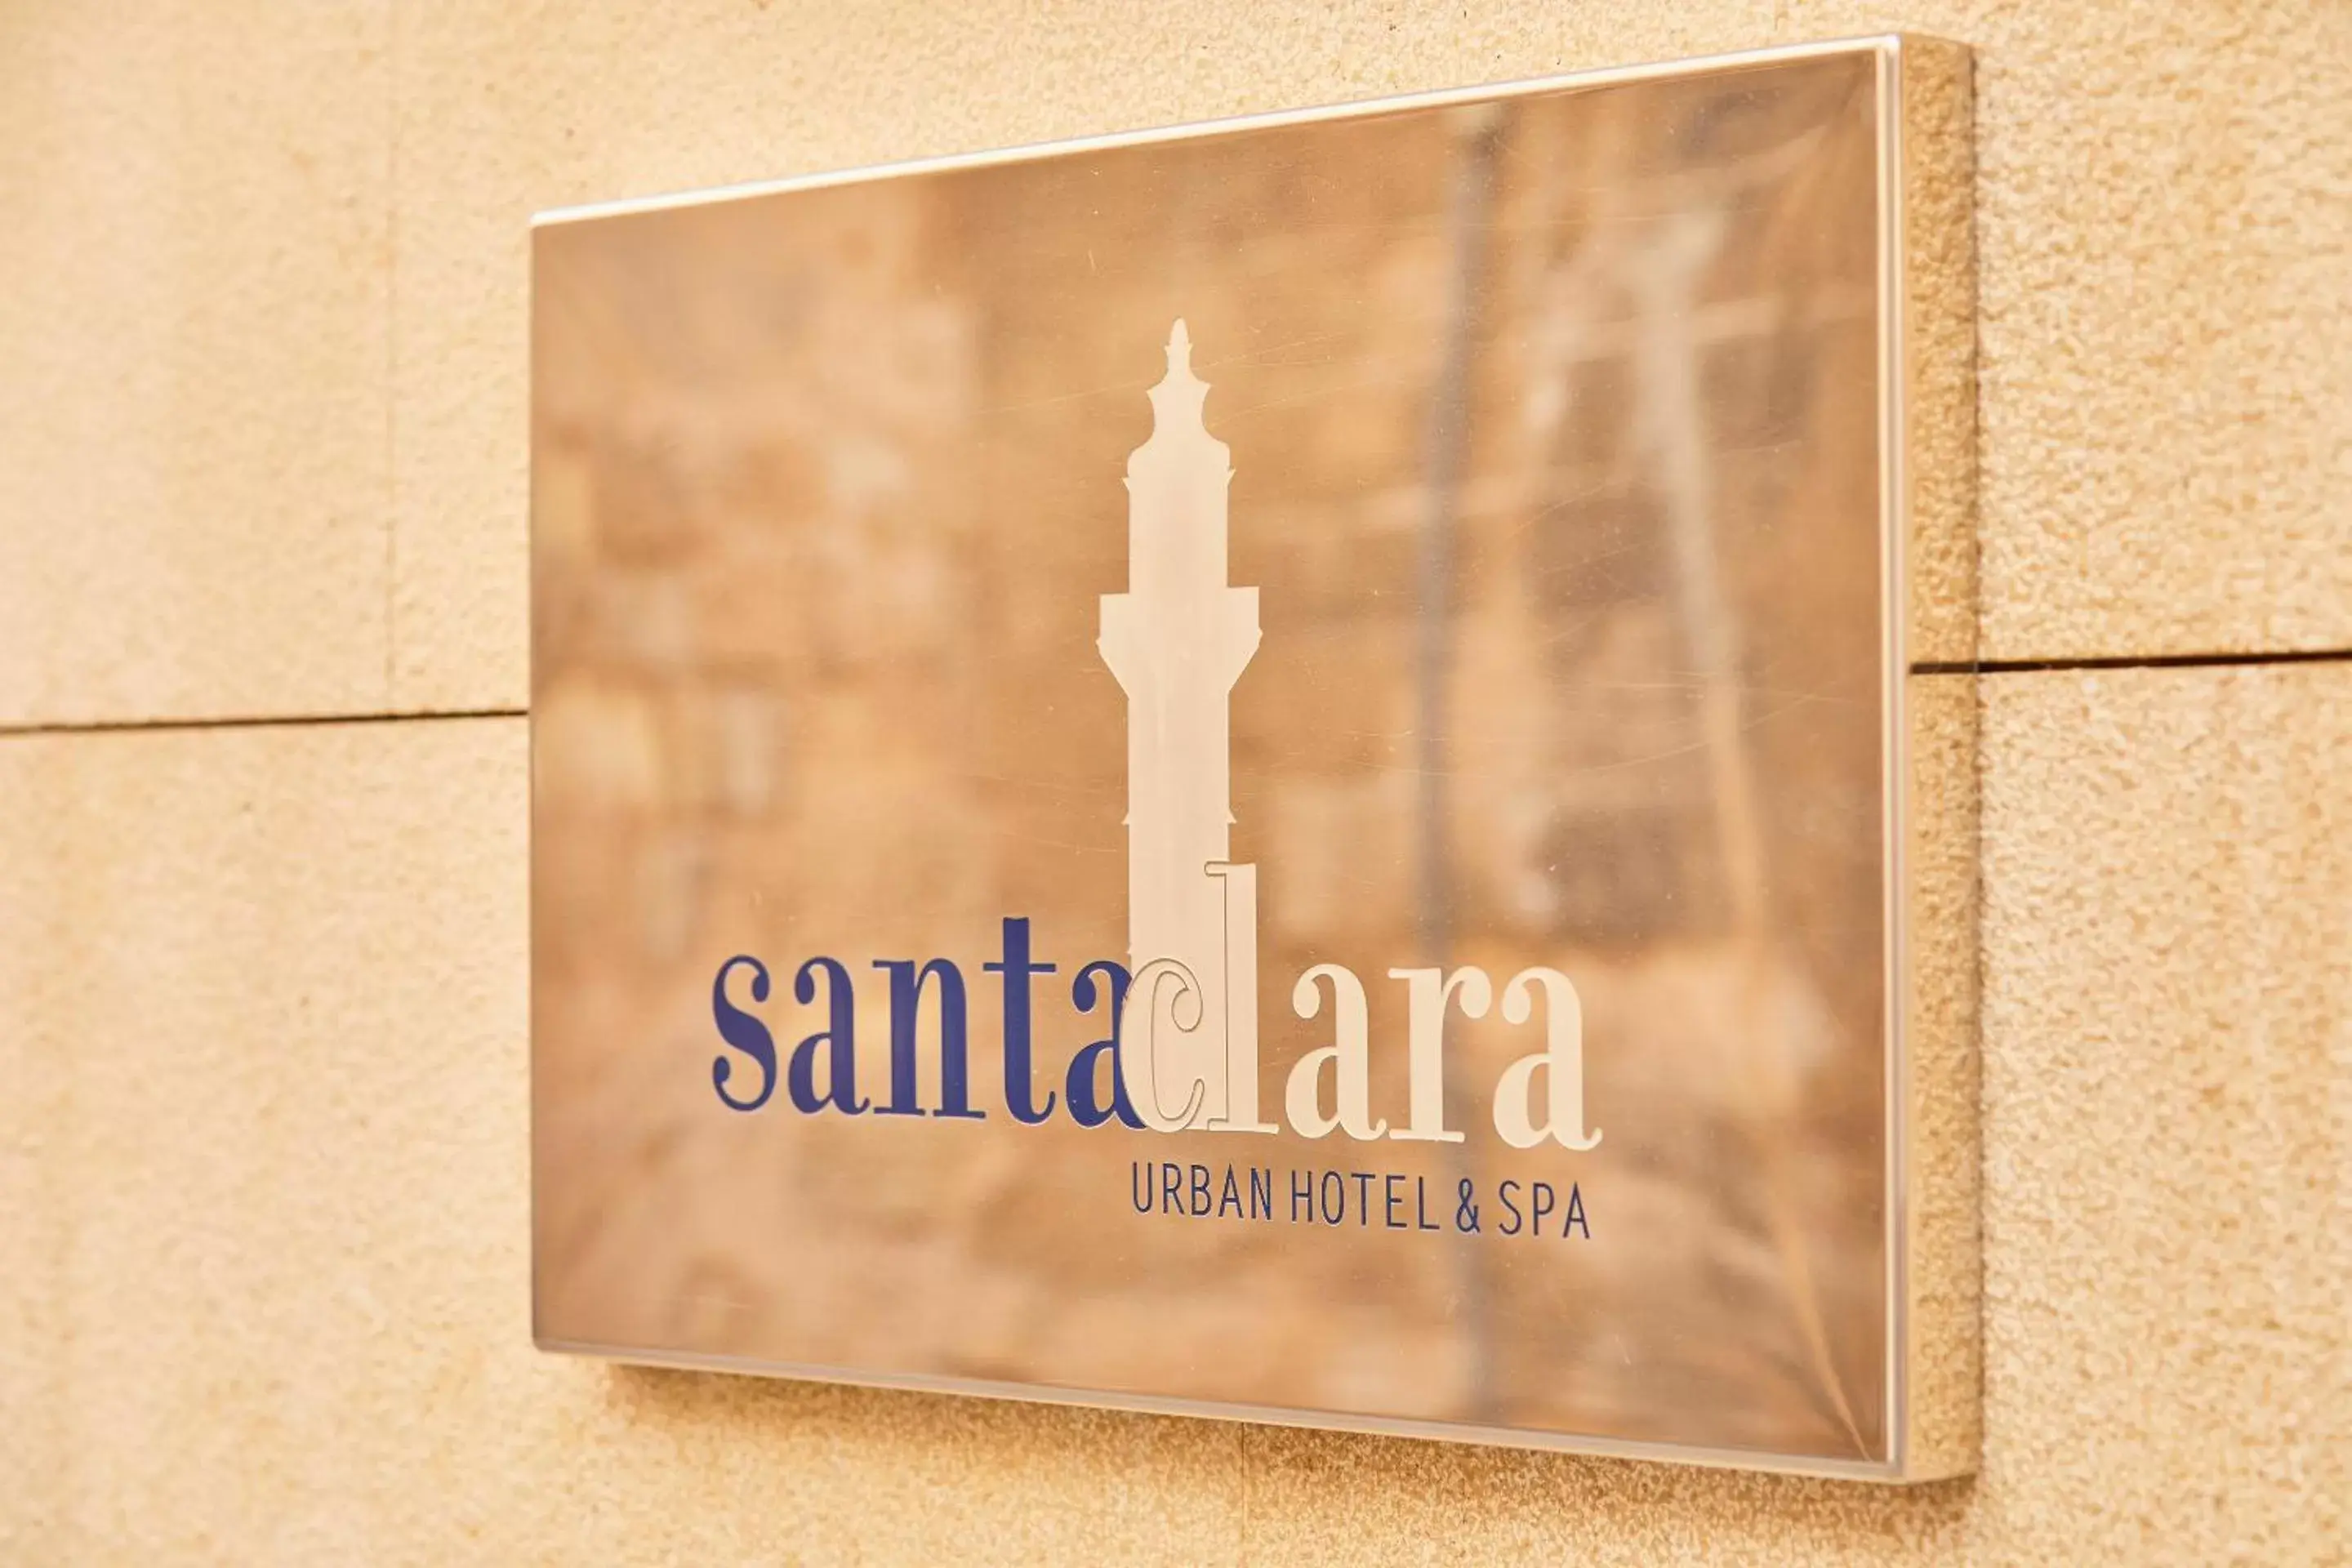 Property logo or sign in Santa Clara Urban Hotel & Spa